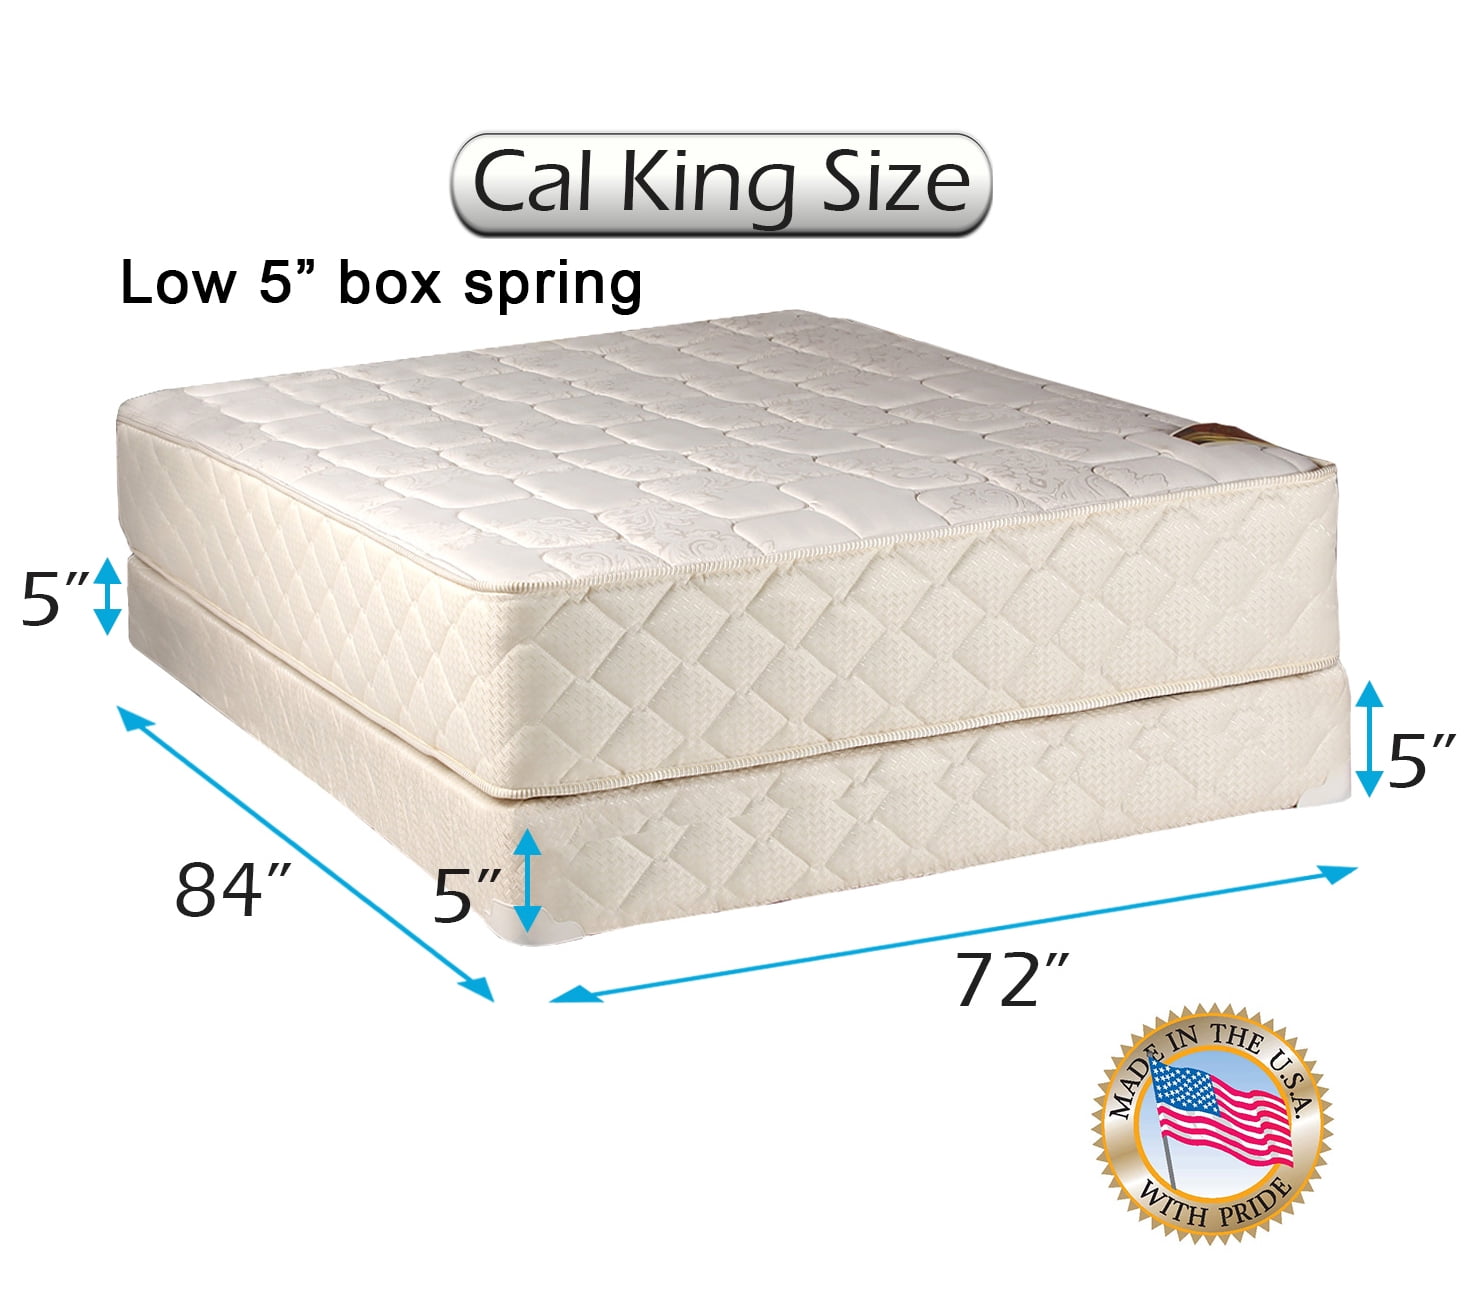 Dream Sleep Grandeur Deluxe Cali King, King Size Bed Box Spring Dimensions